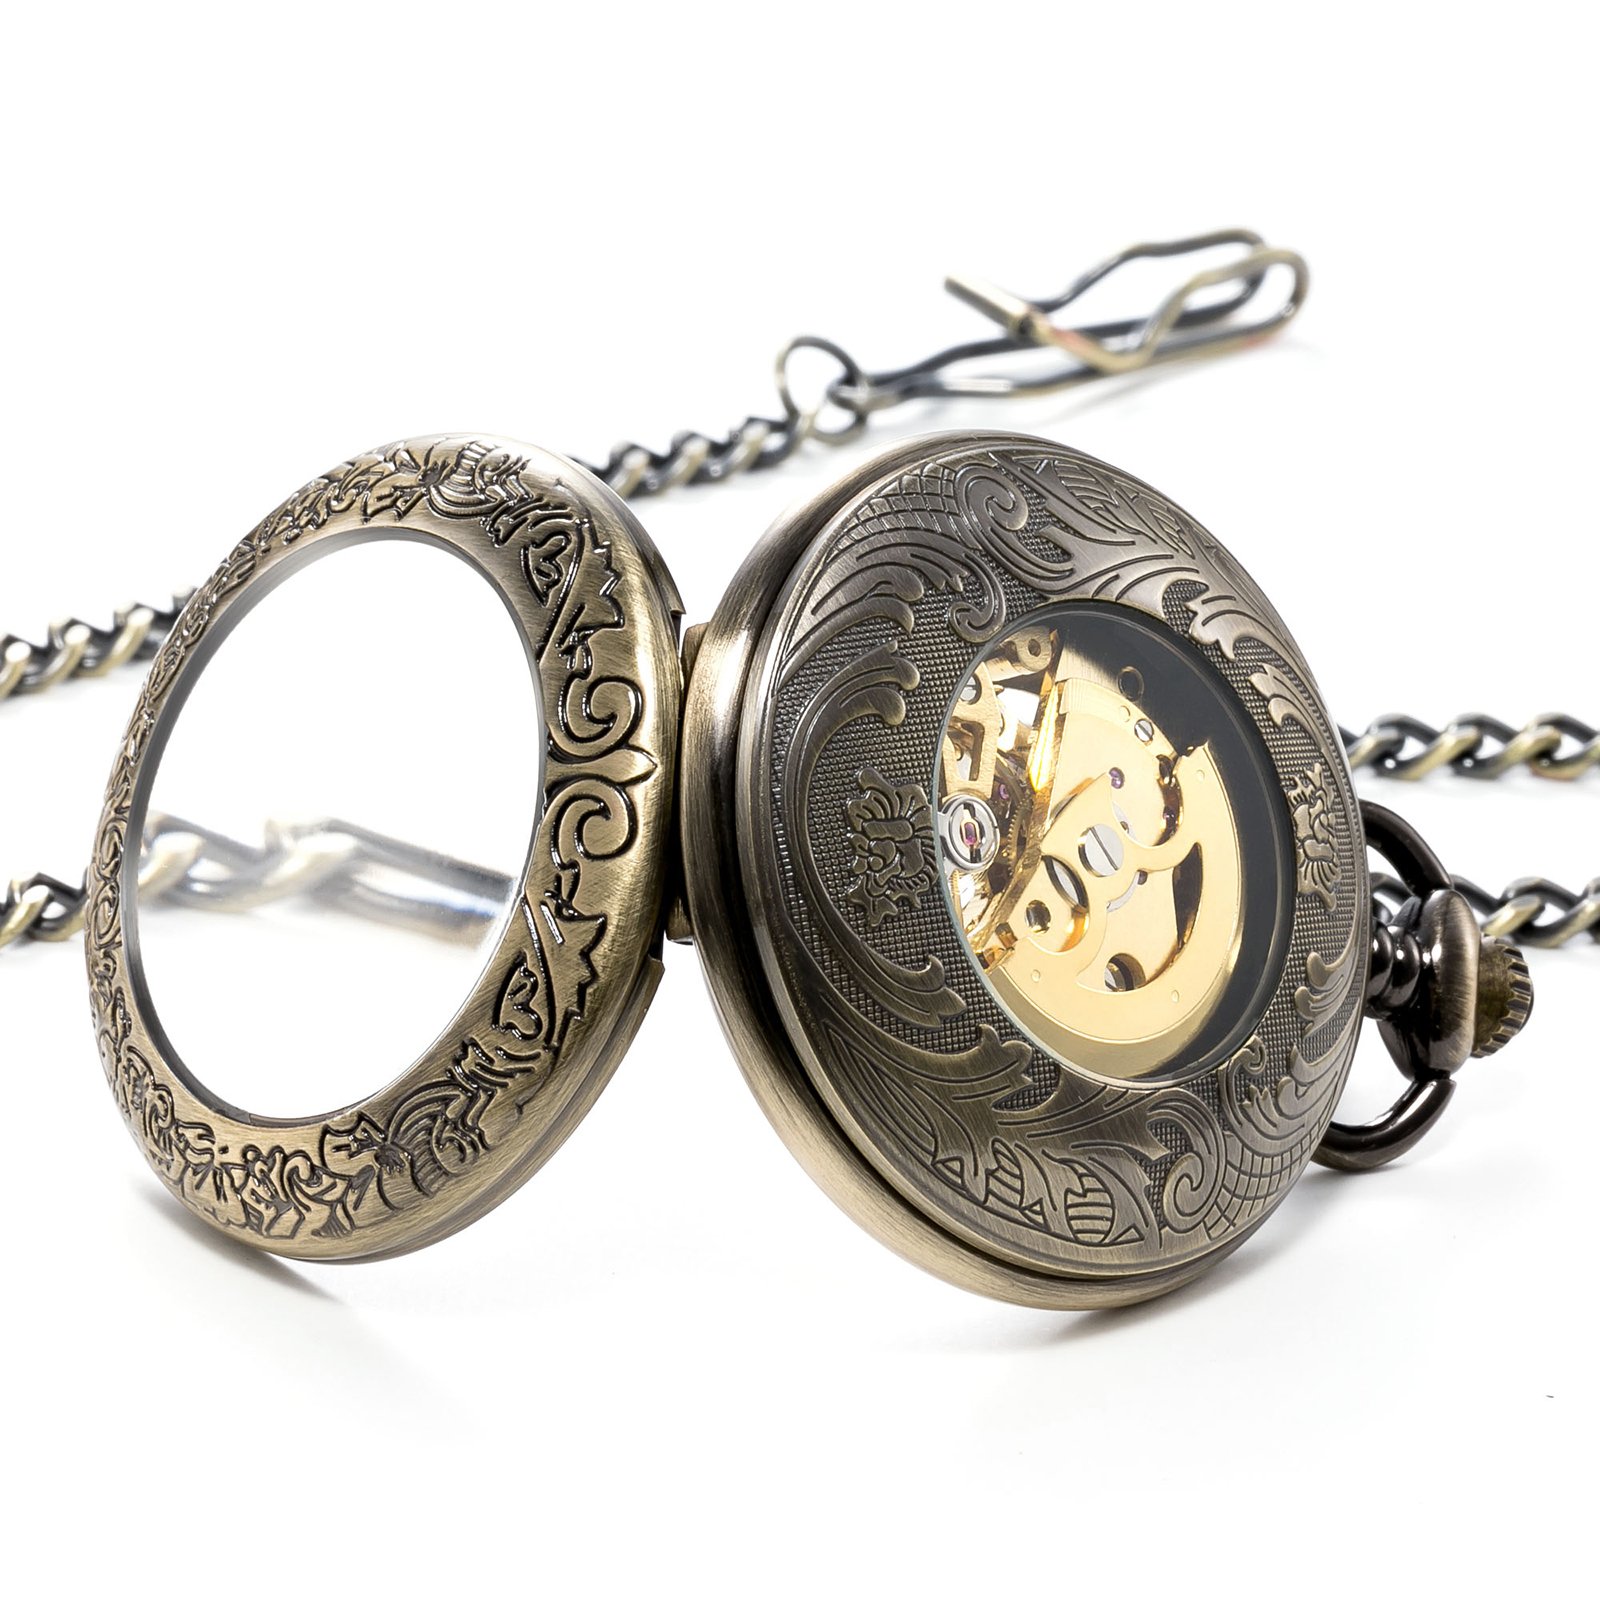 TREEWETO Automatic Mechanical Pocket Watch Magnifier Case Steampunk Skeleton Roman Numerals Dial for Men Women Bronze